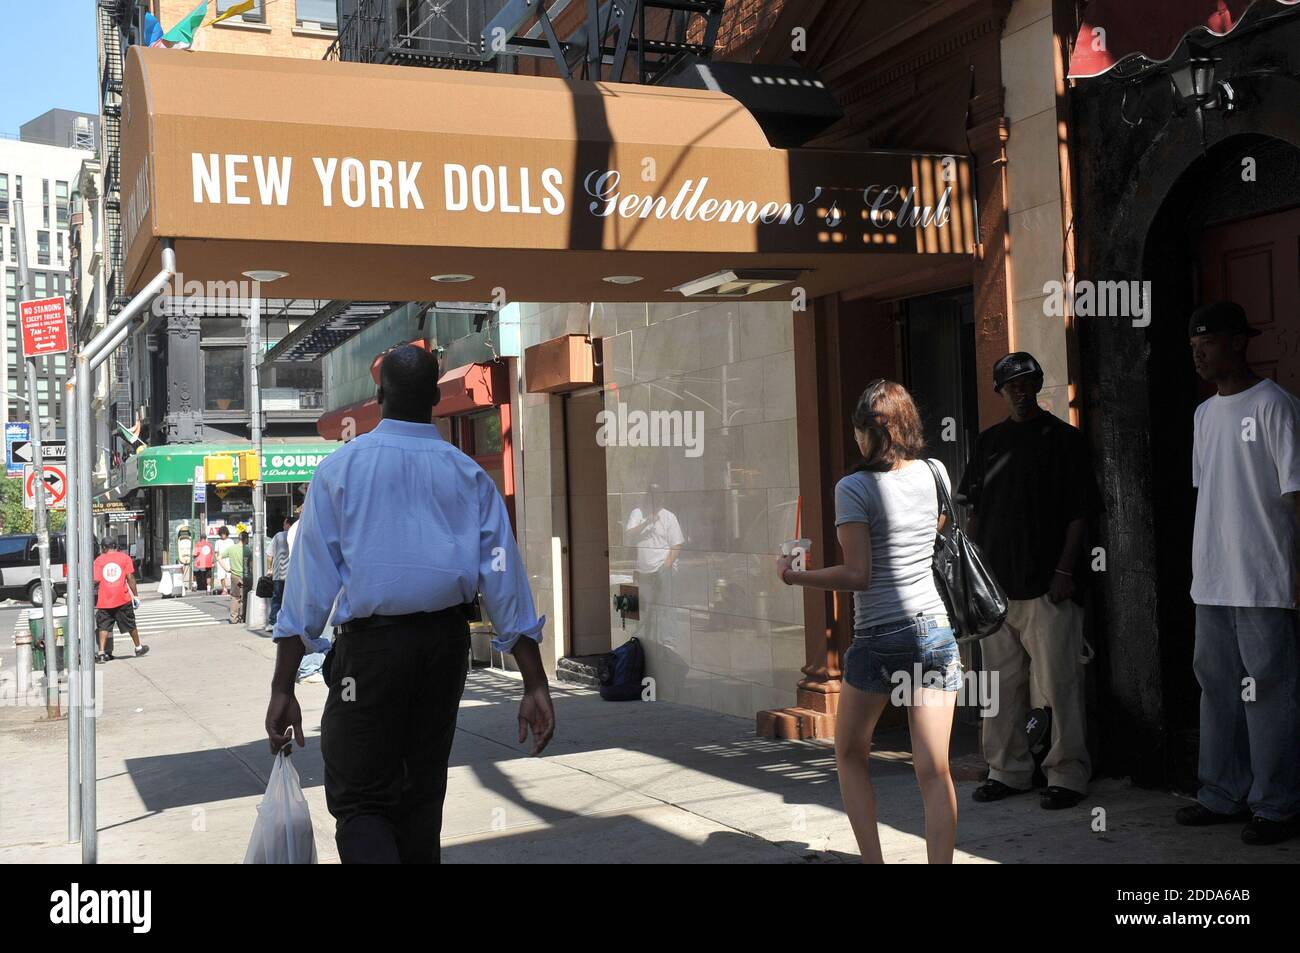 NO FILM, NO VIDEO, NO TV, NO DOCUMENTARY - People walk past the New York Dolls Gentlemen's Club near ground zero in New York, NY, USA on August 19, 2010. Photo by Diane Bondareff/MCT/ABACAPRESS.COM Stock Photo